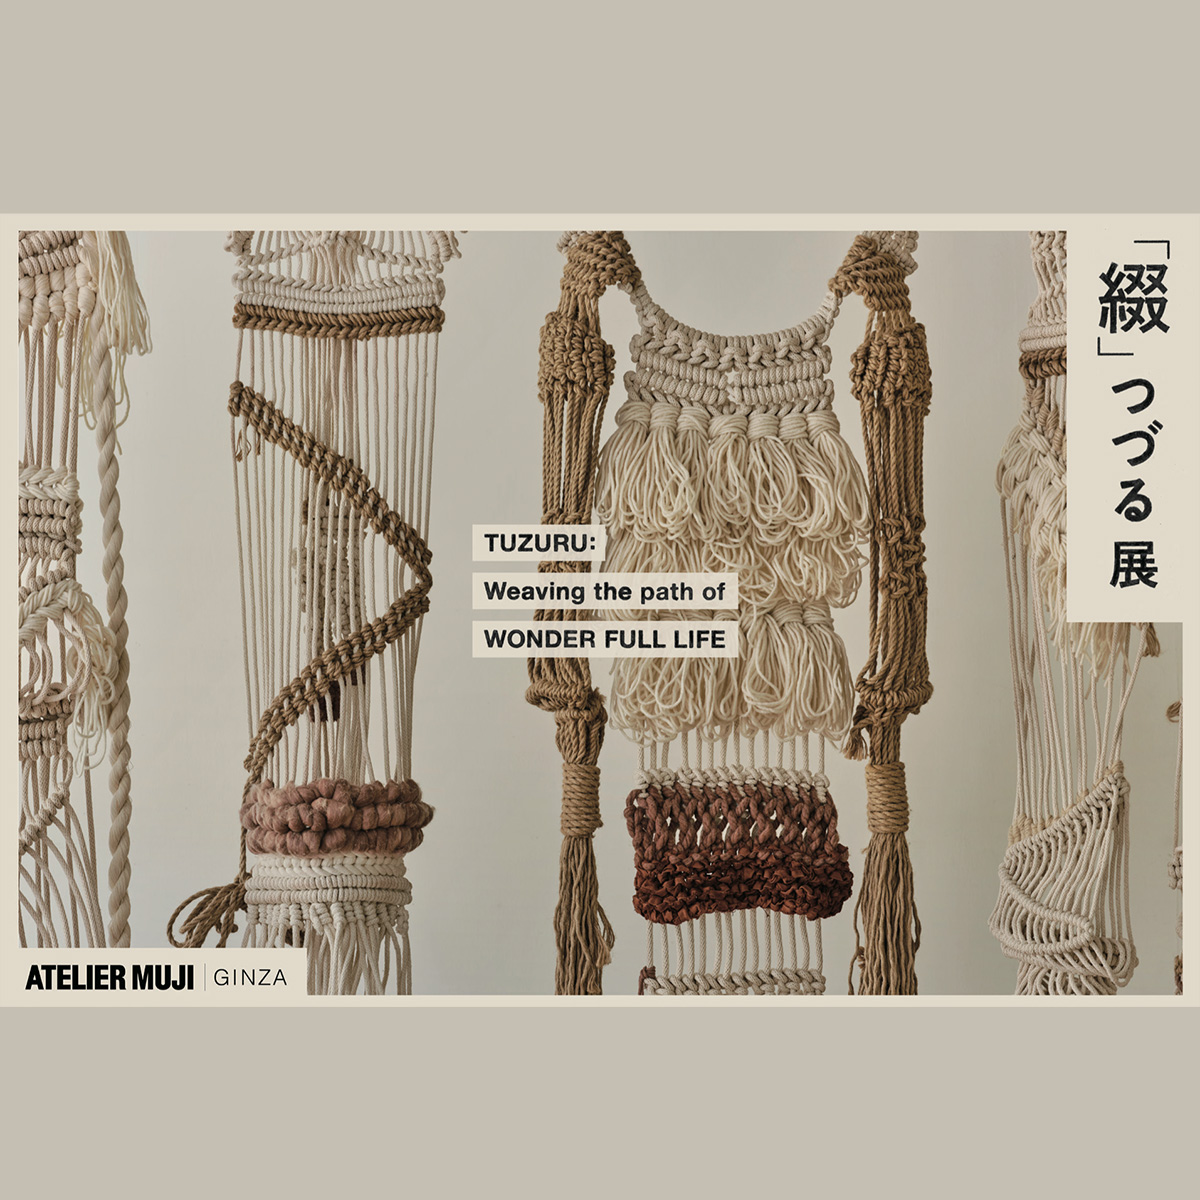 ATELIER MUJI GINZAによる企画展『「綴」-つづる展-Weaving the path of WONDER FULL ...